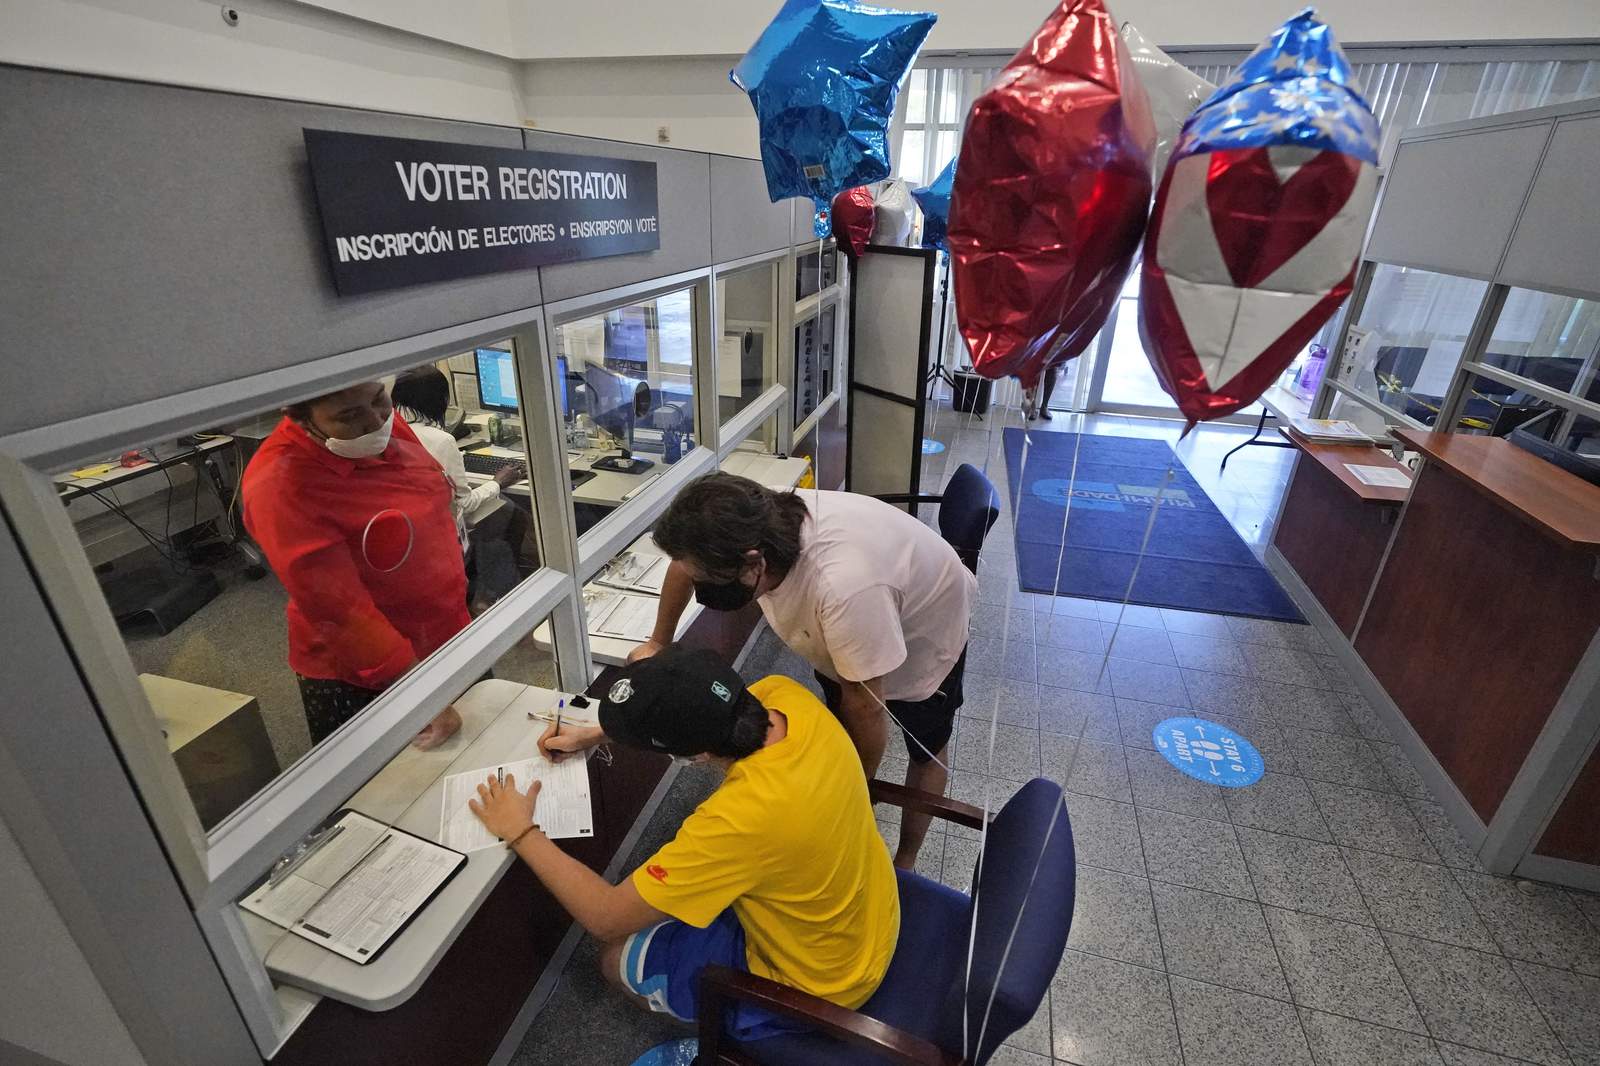 Server configuration caused Florida voter registration crash